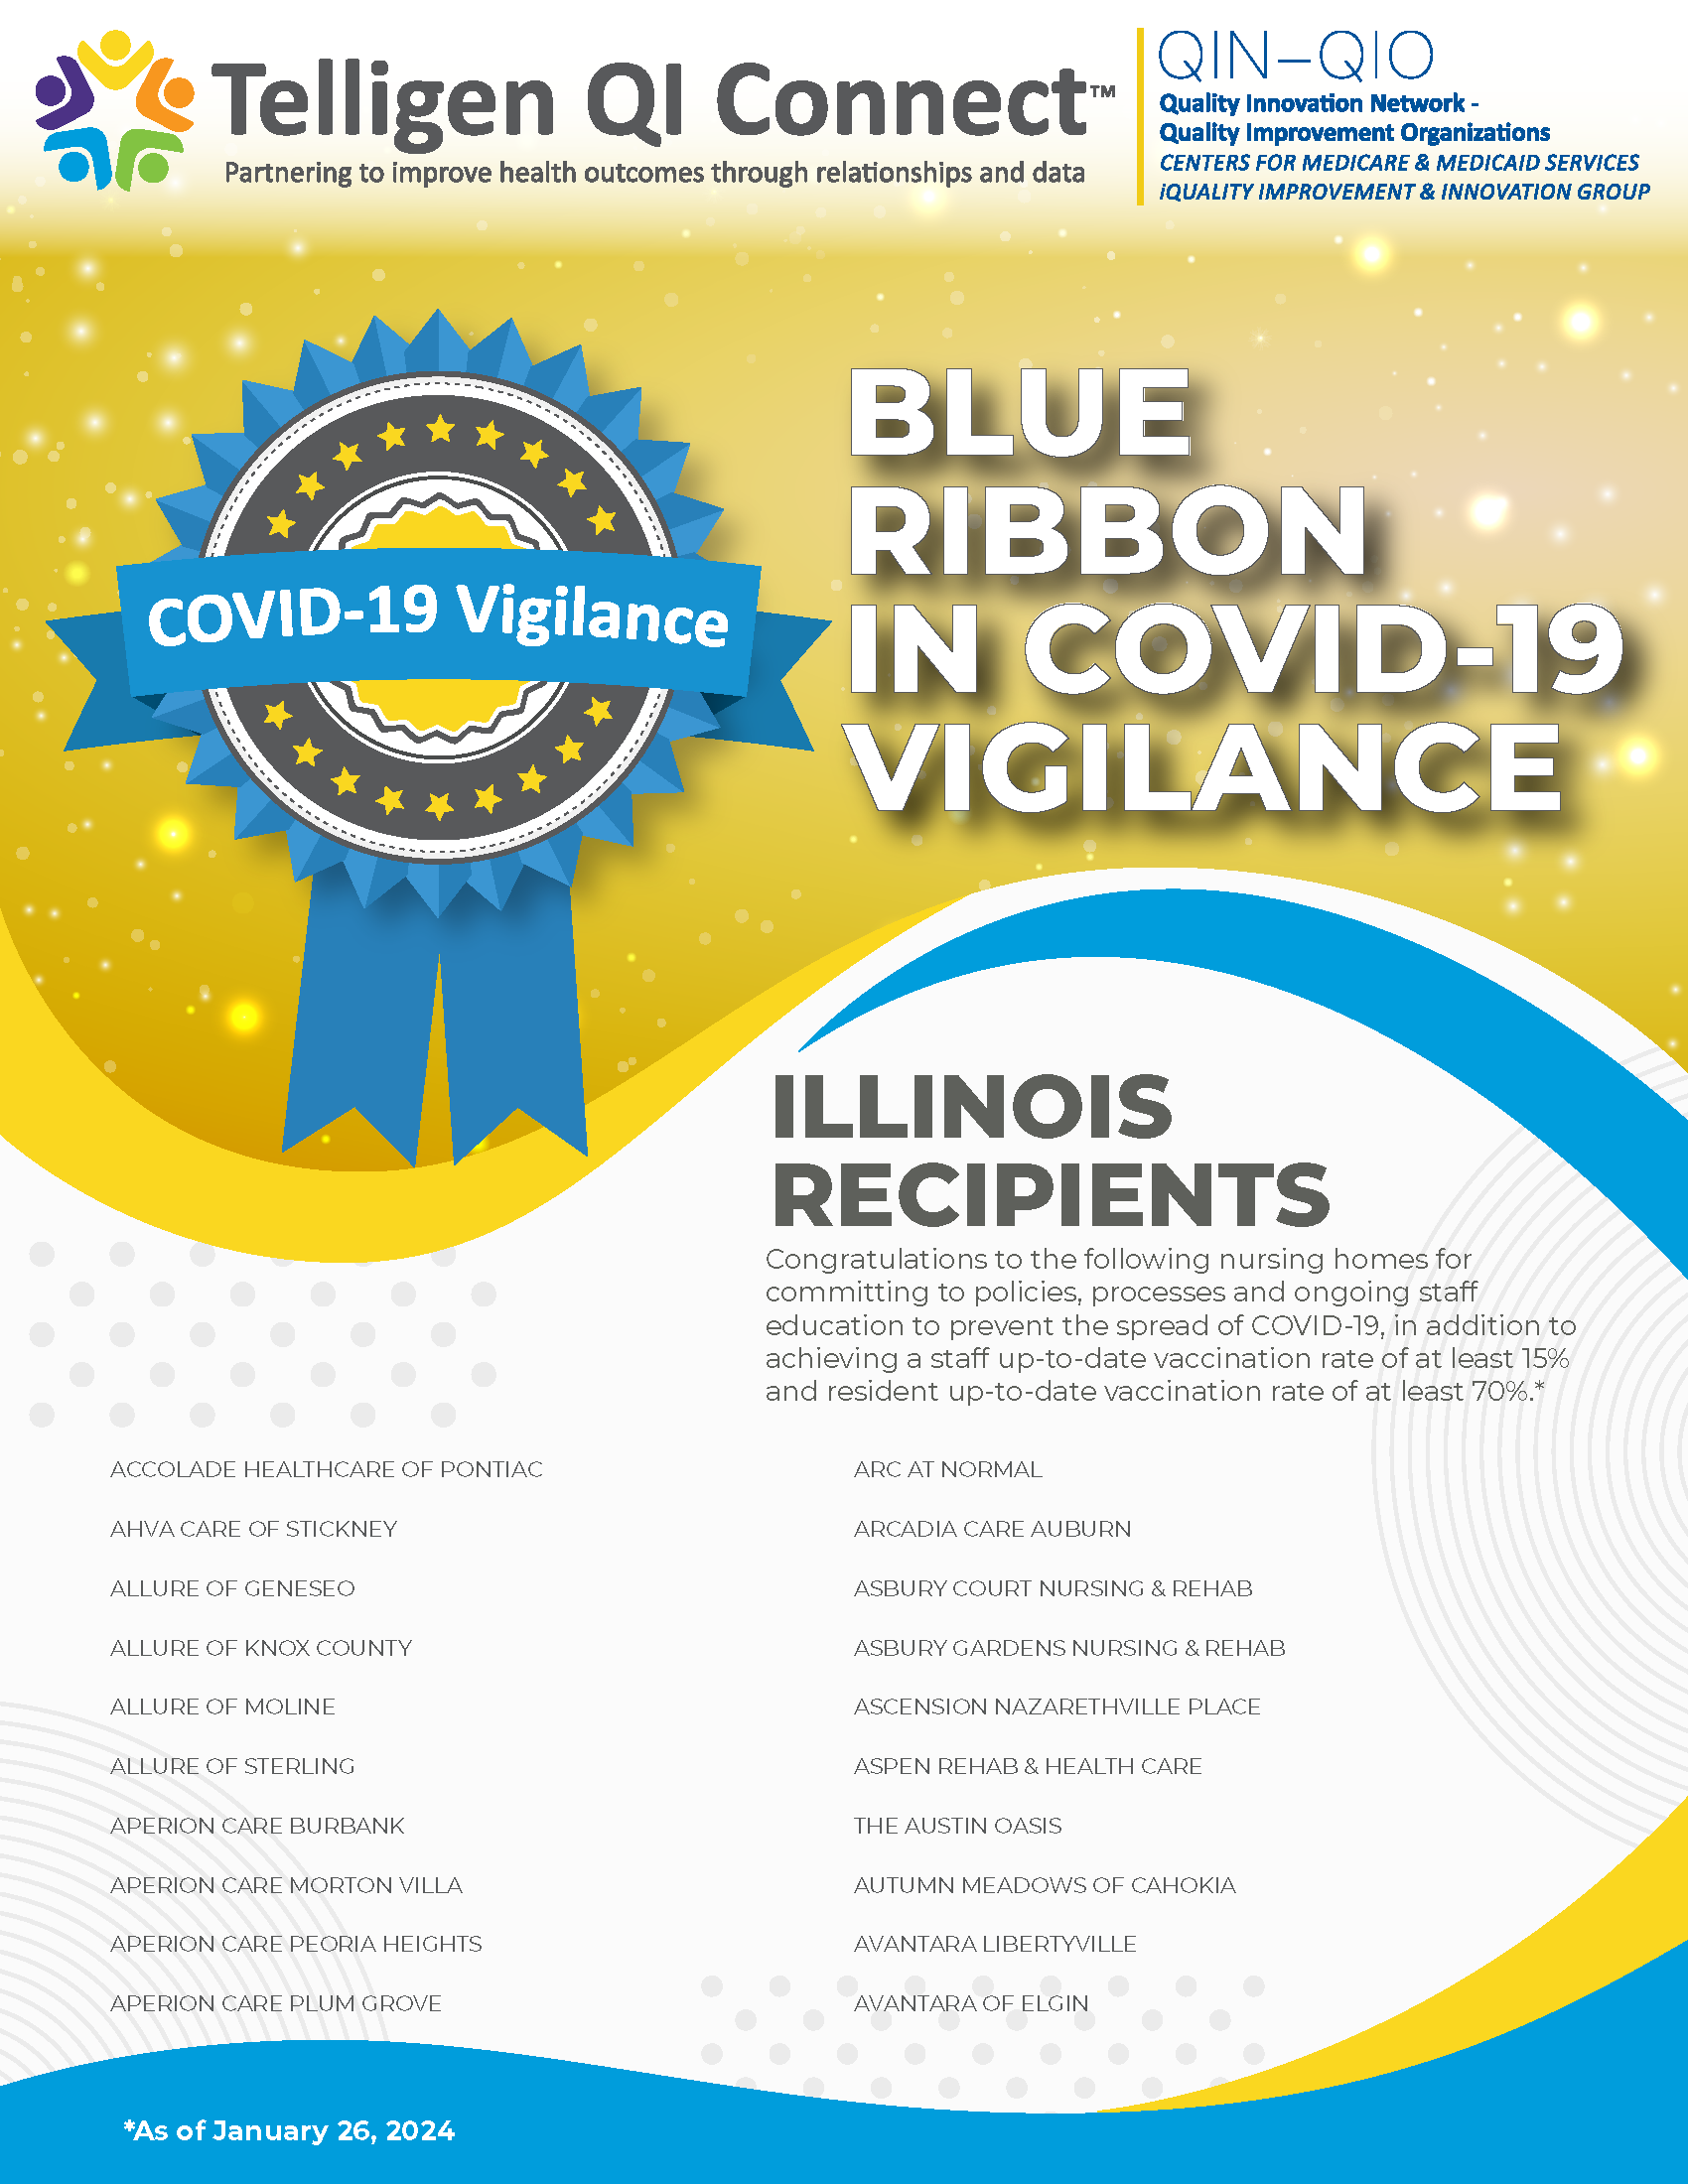 Illinois Blue Ribbon Recipients